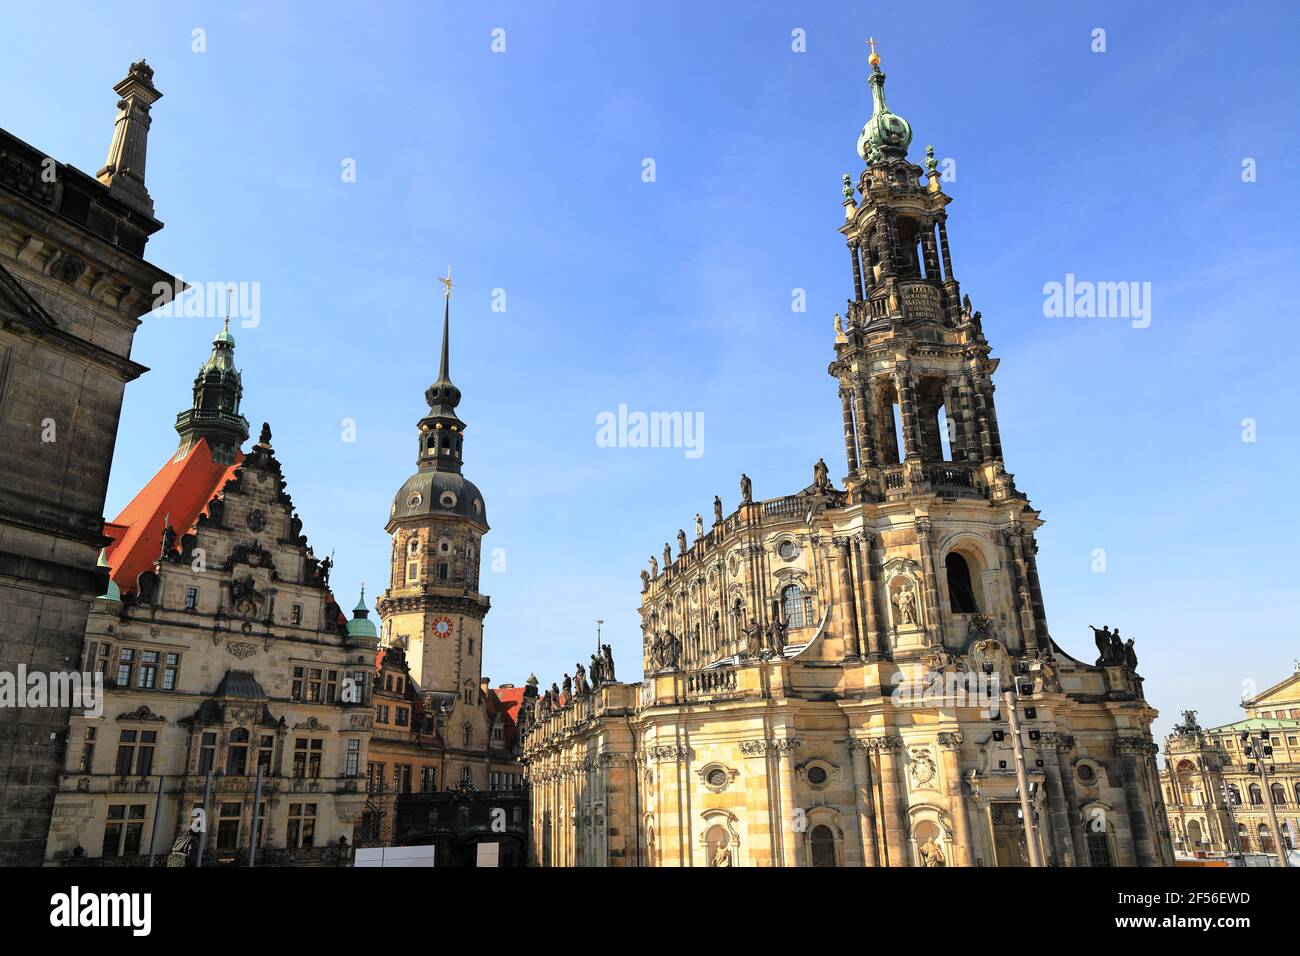 The ancient city of Dresden. Saxony, Germany, Europe. Stock Photo